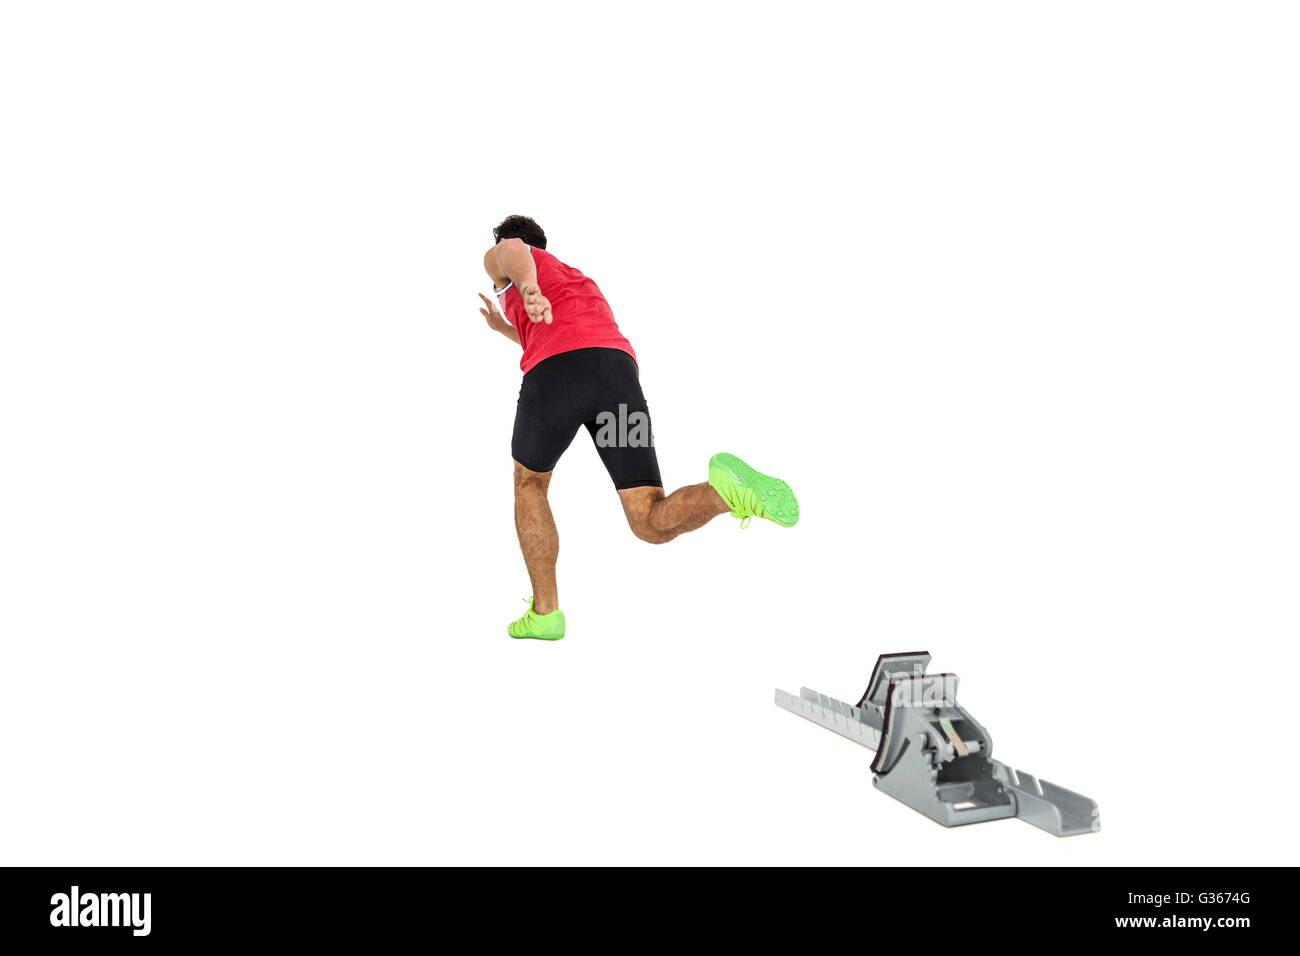 Male athlete running from starting blocks Stock Photo